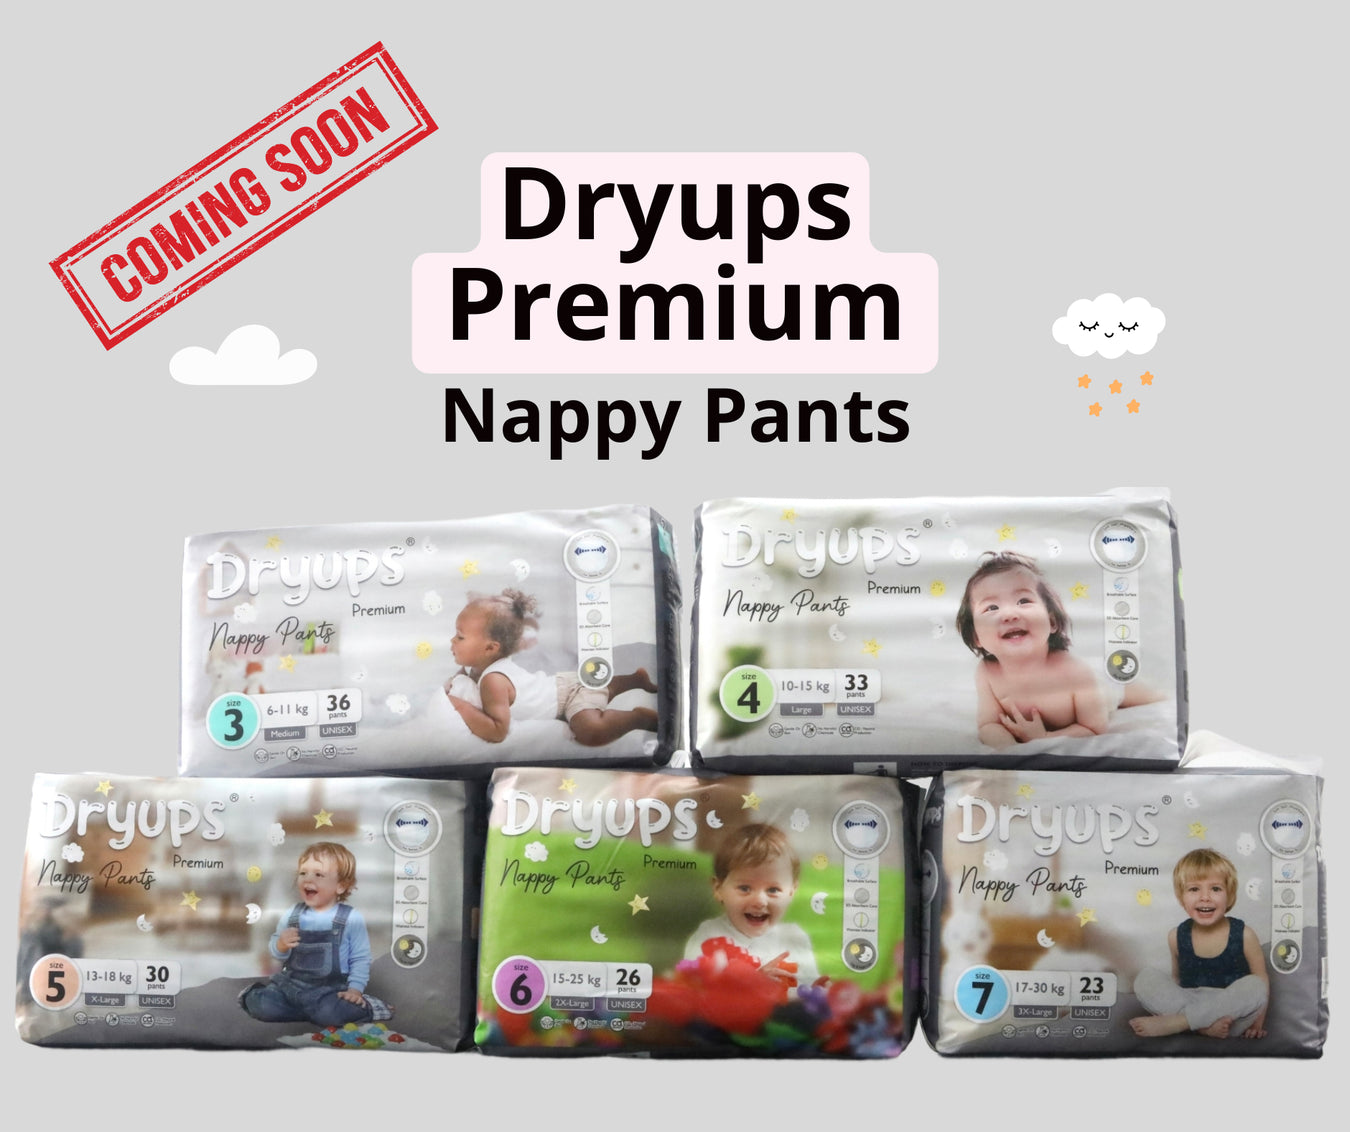 Dryups Premium Nappy Pants